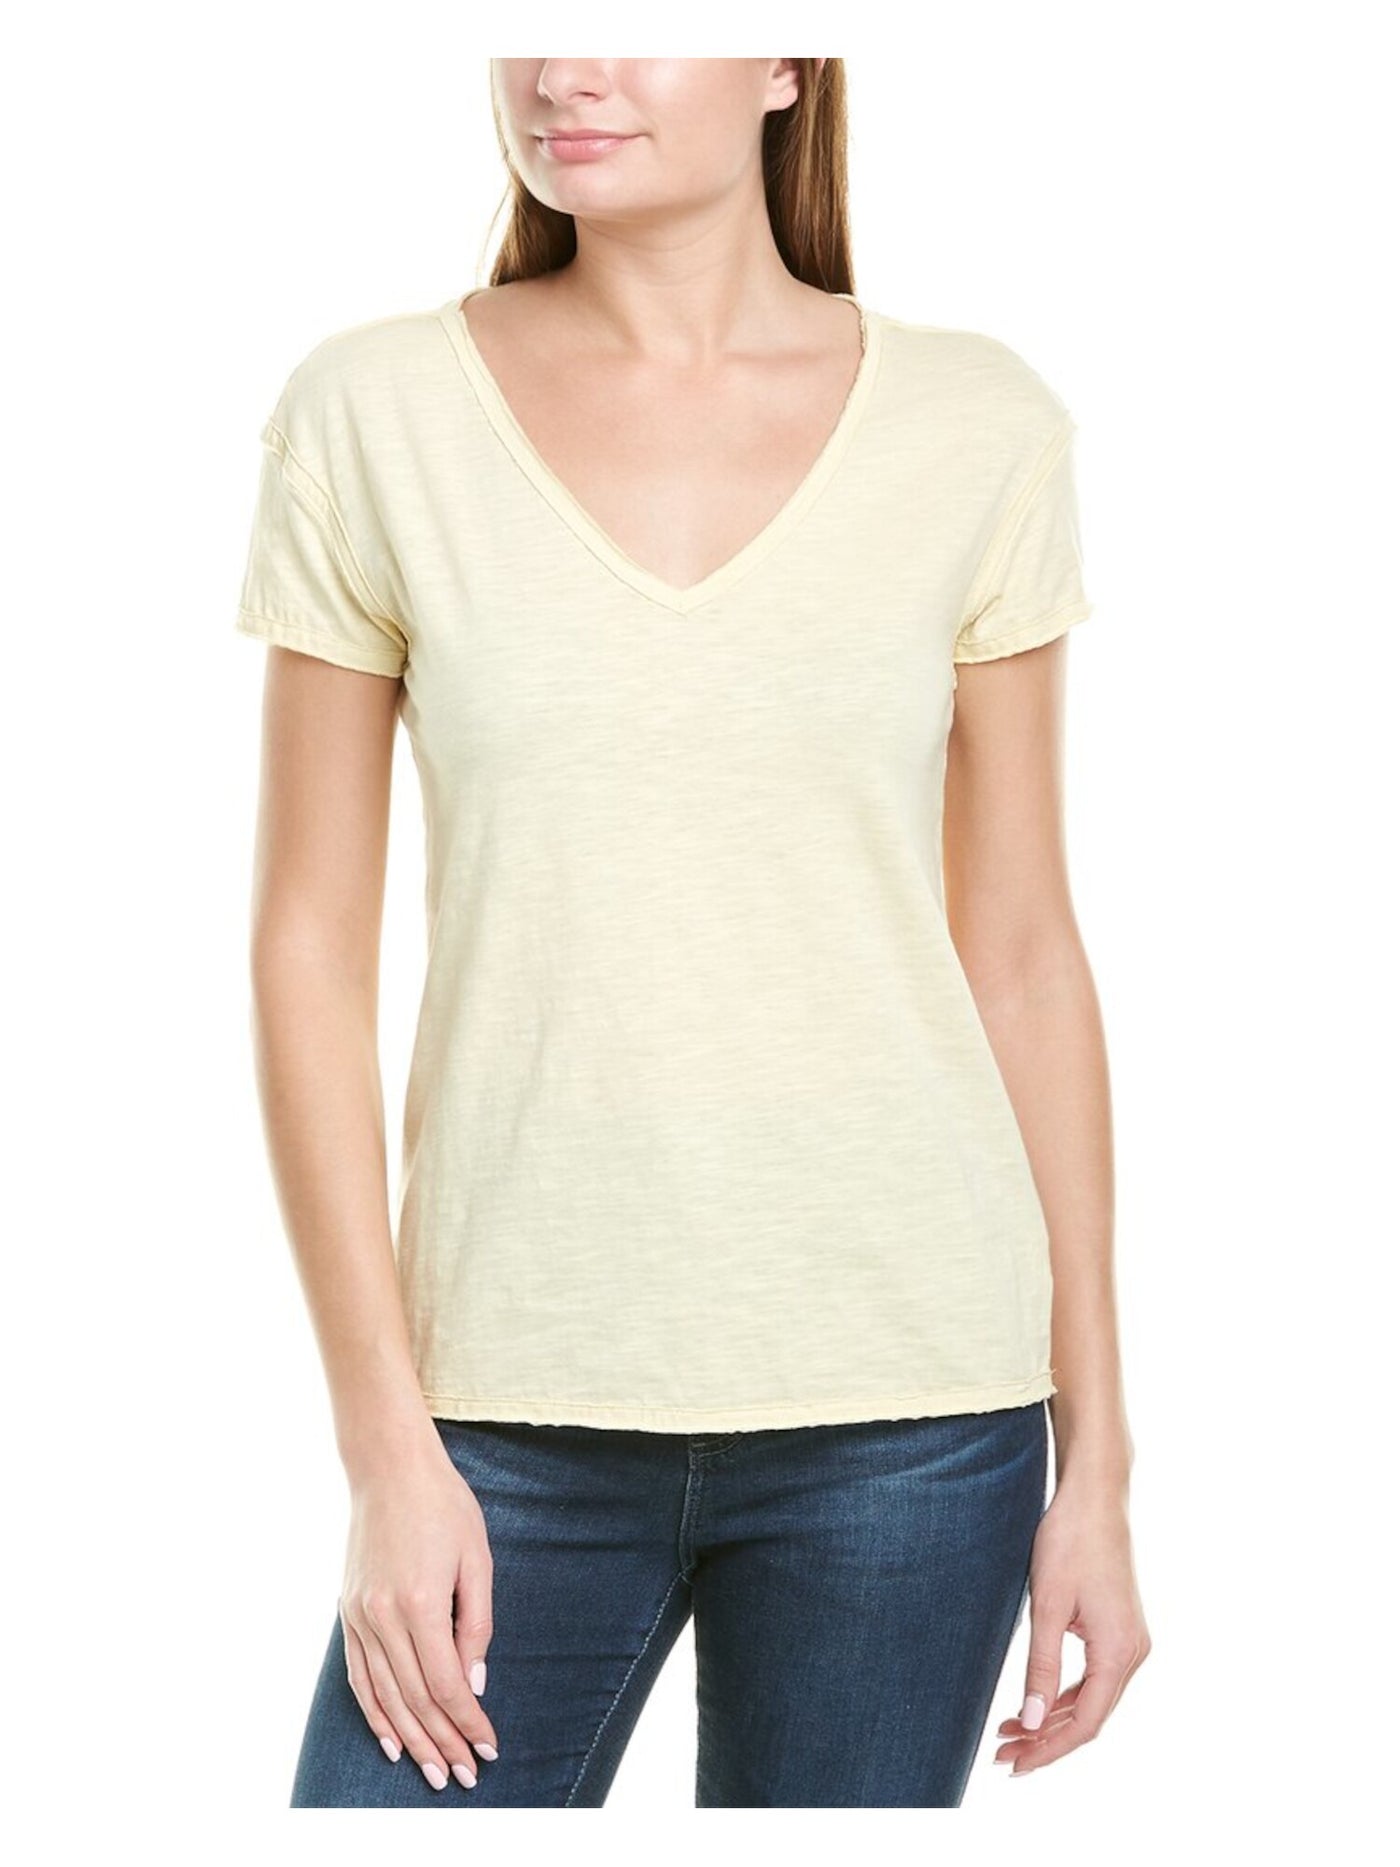 B NEW YORK Womens Yellow Short Sleeve V Neck Top Size: XS